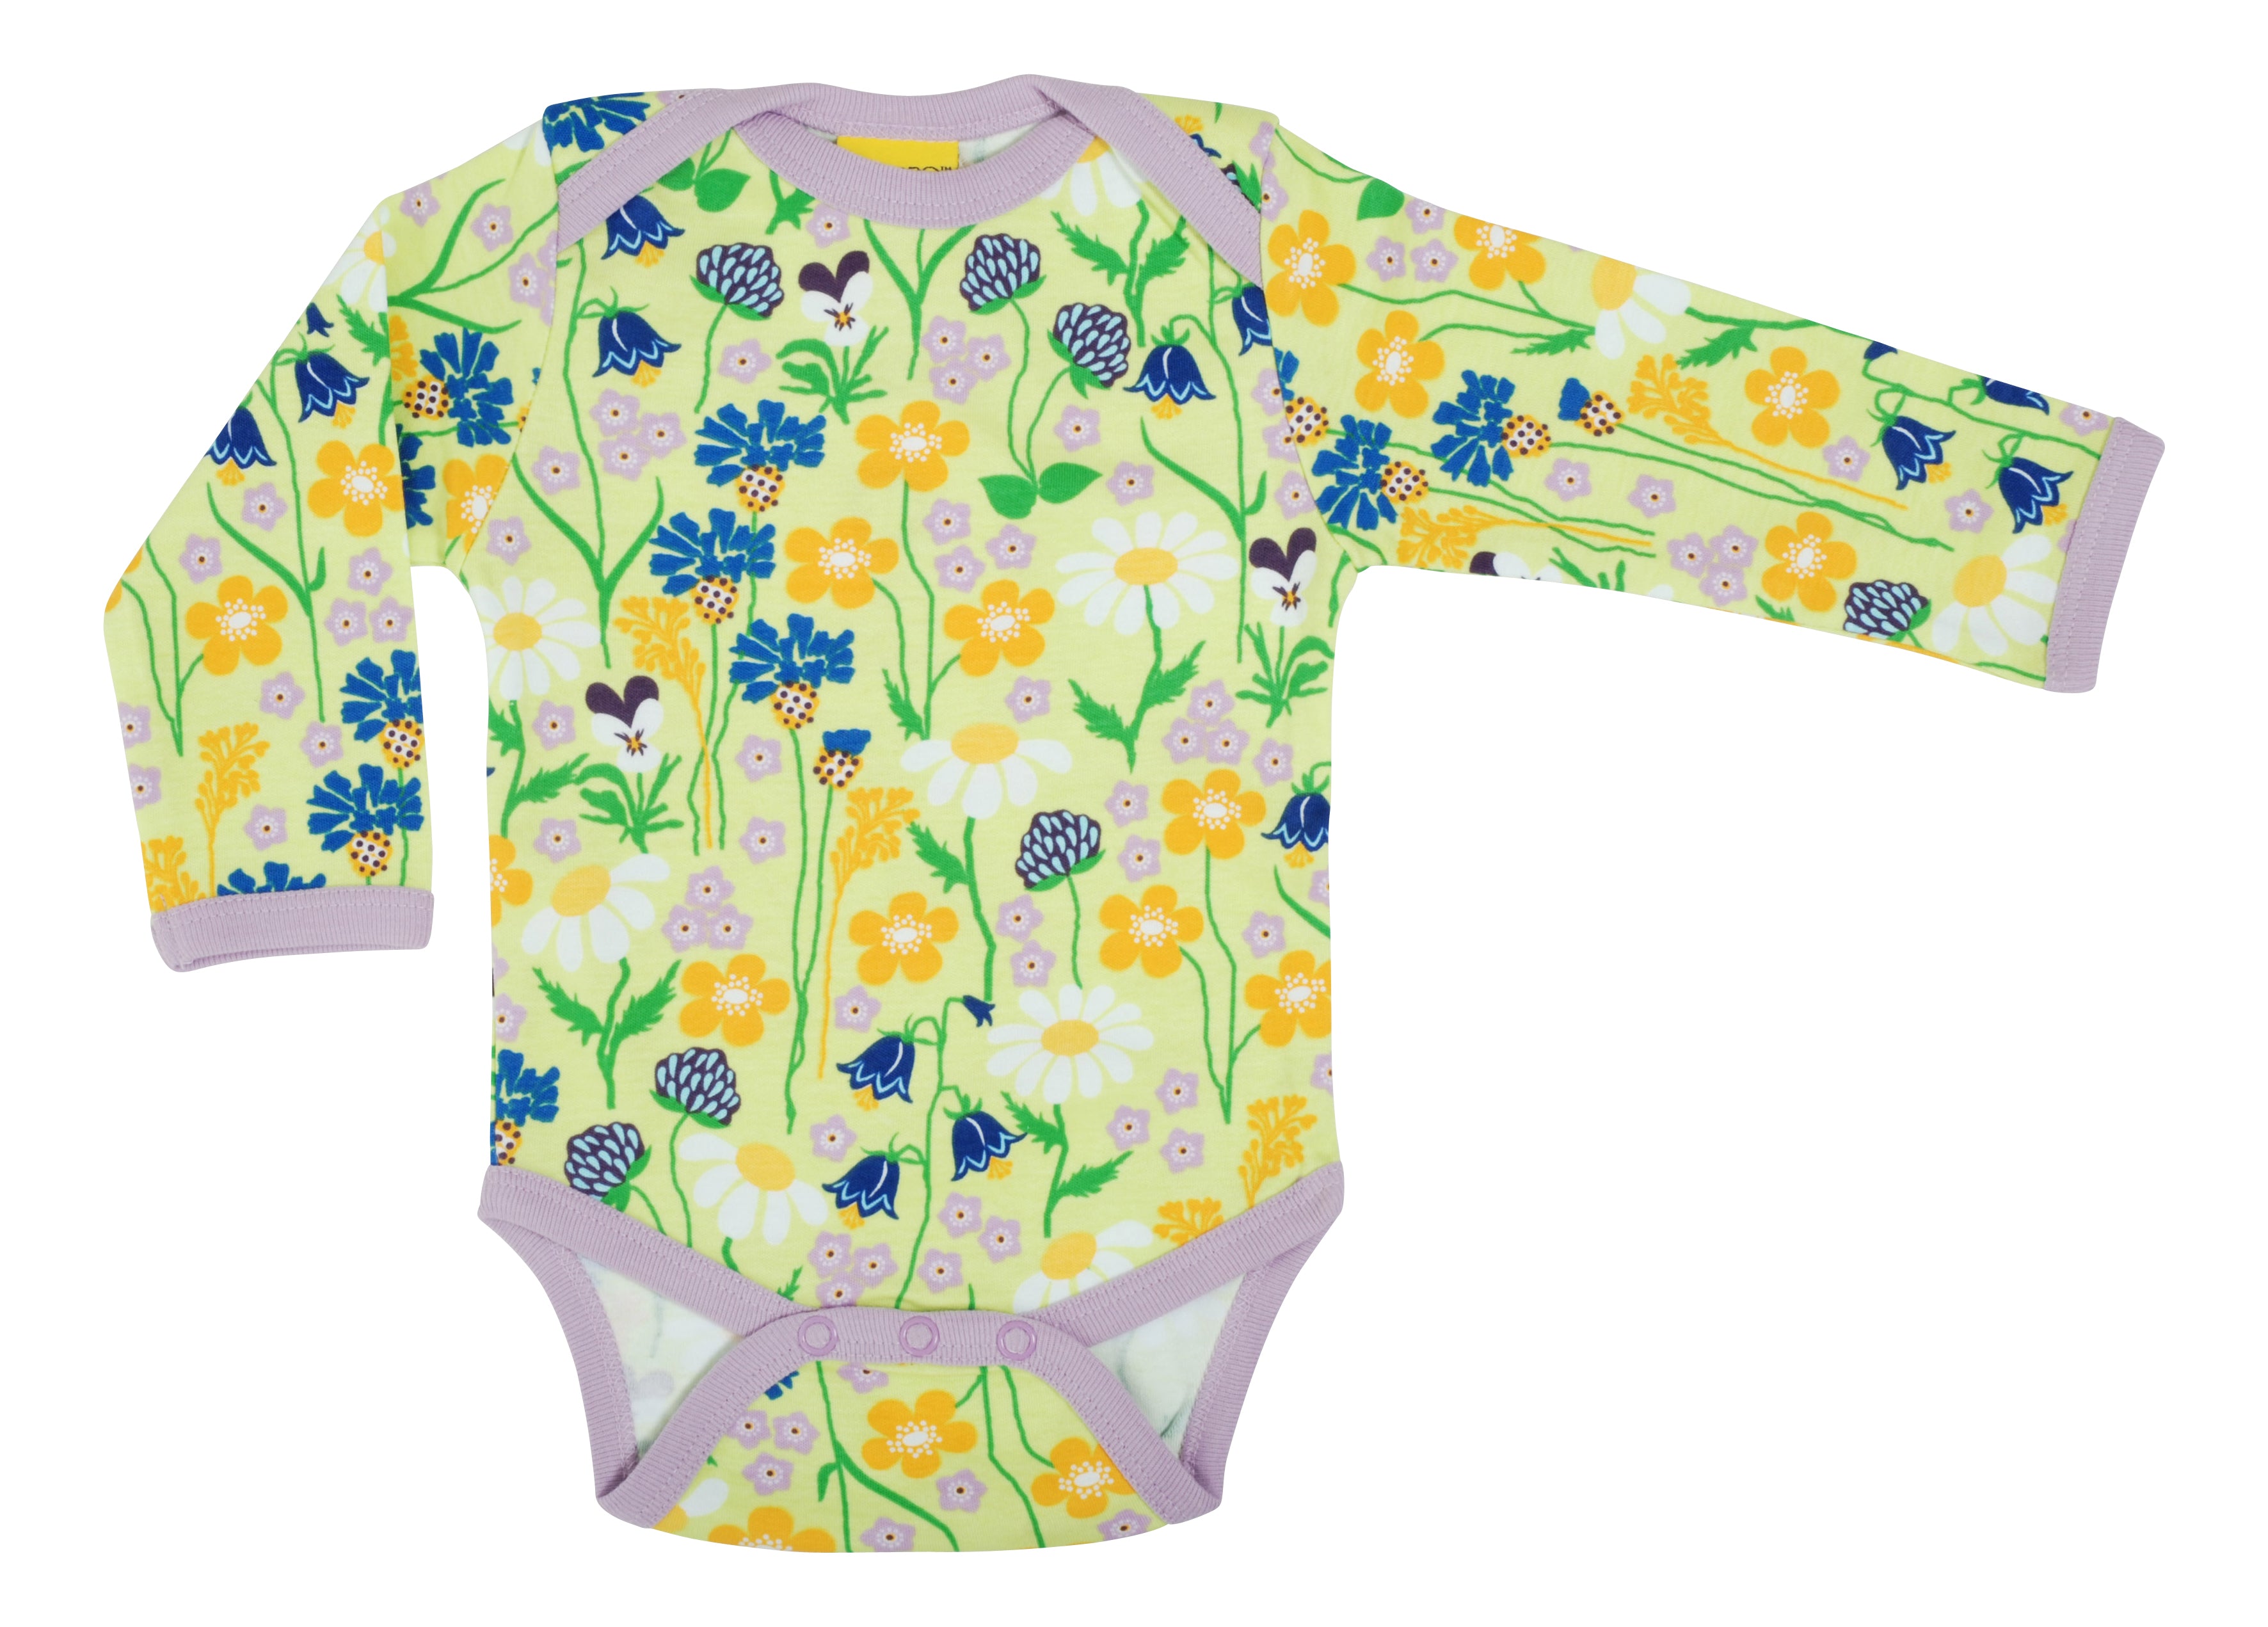 Duns Sweden LS body suit - Midsummer Flowers - Green